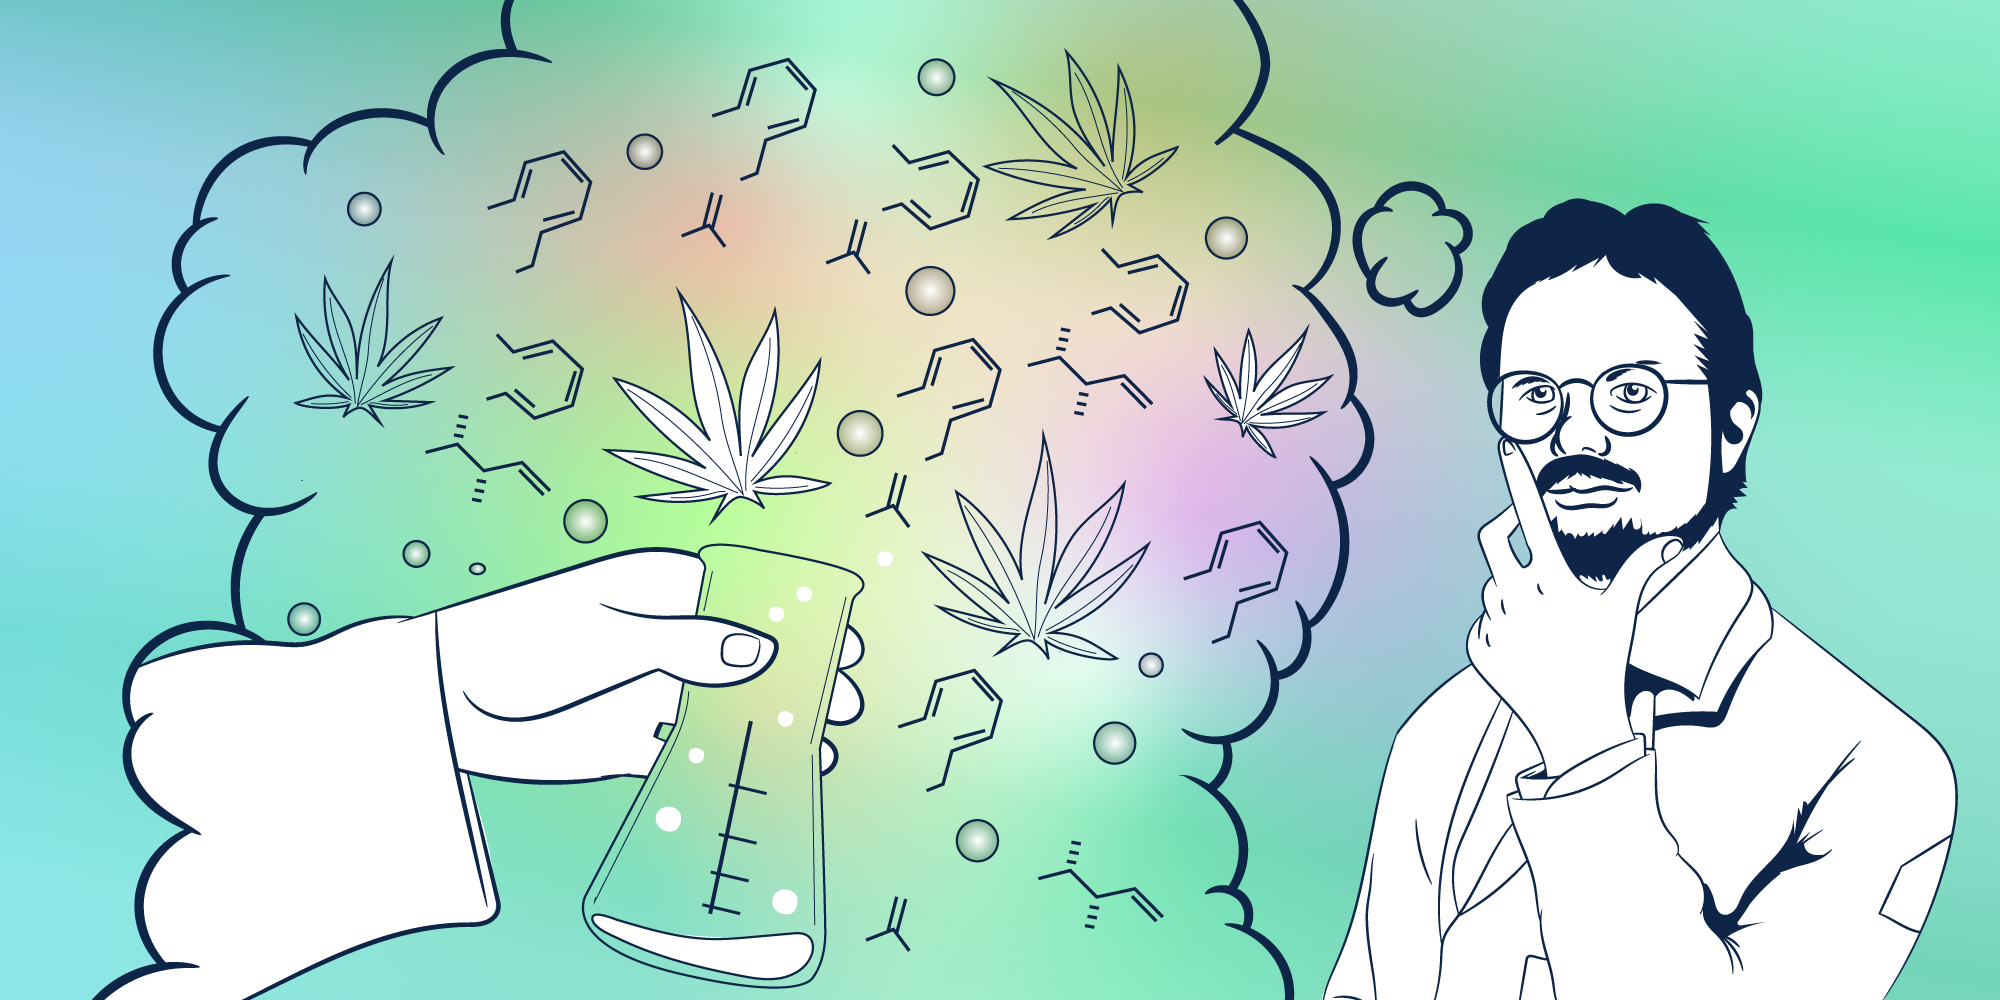 Alex Hildreth Art Image With Cannabis Plants 